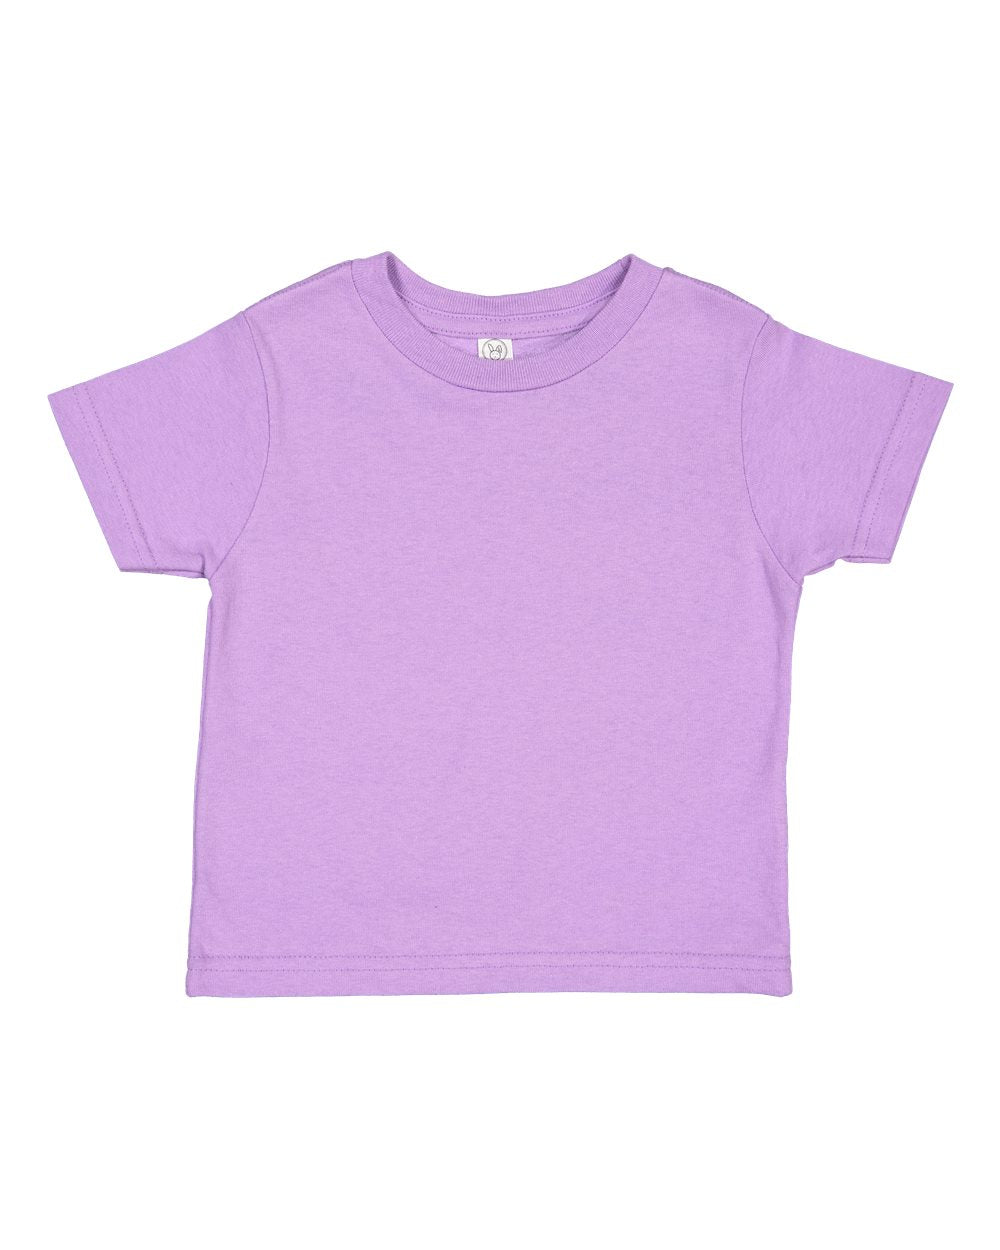 rabbit skins toddler cotton jersey tee lavender purple